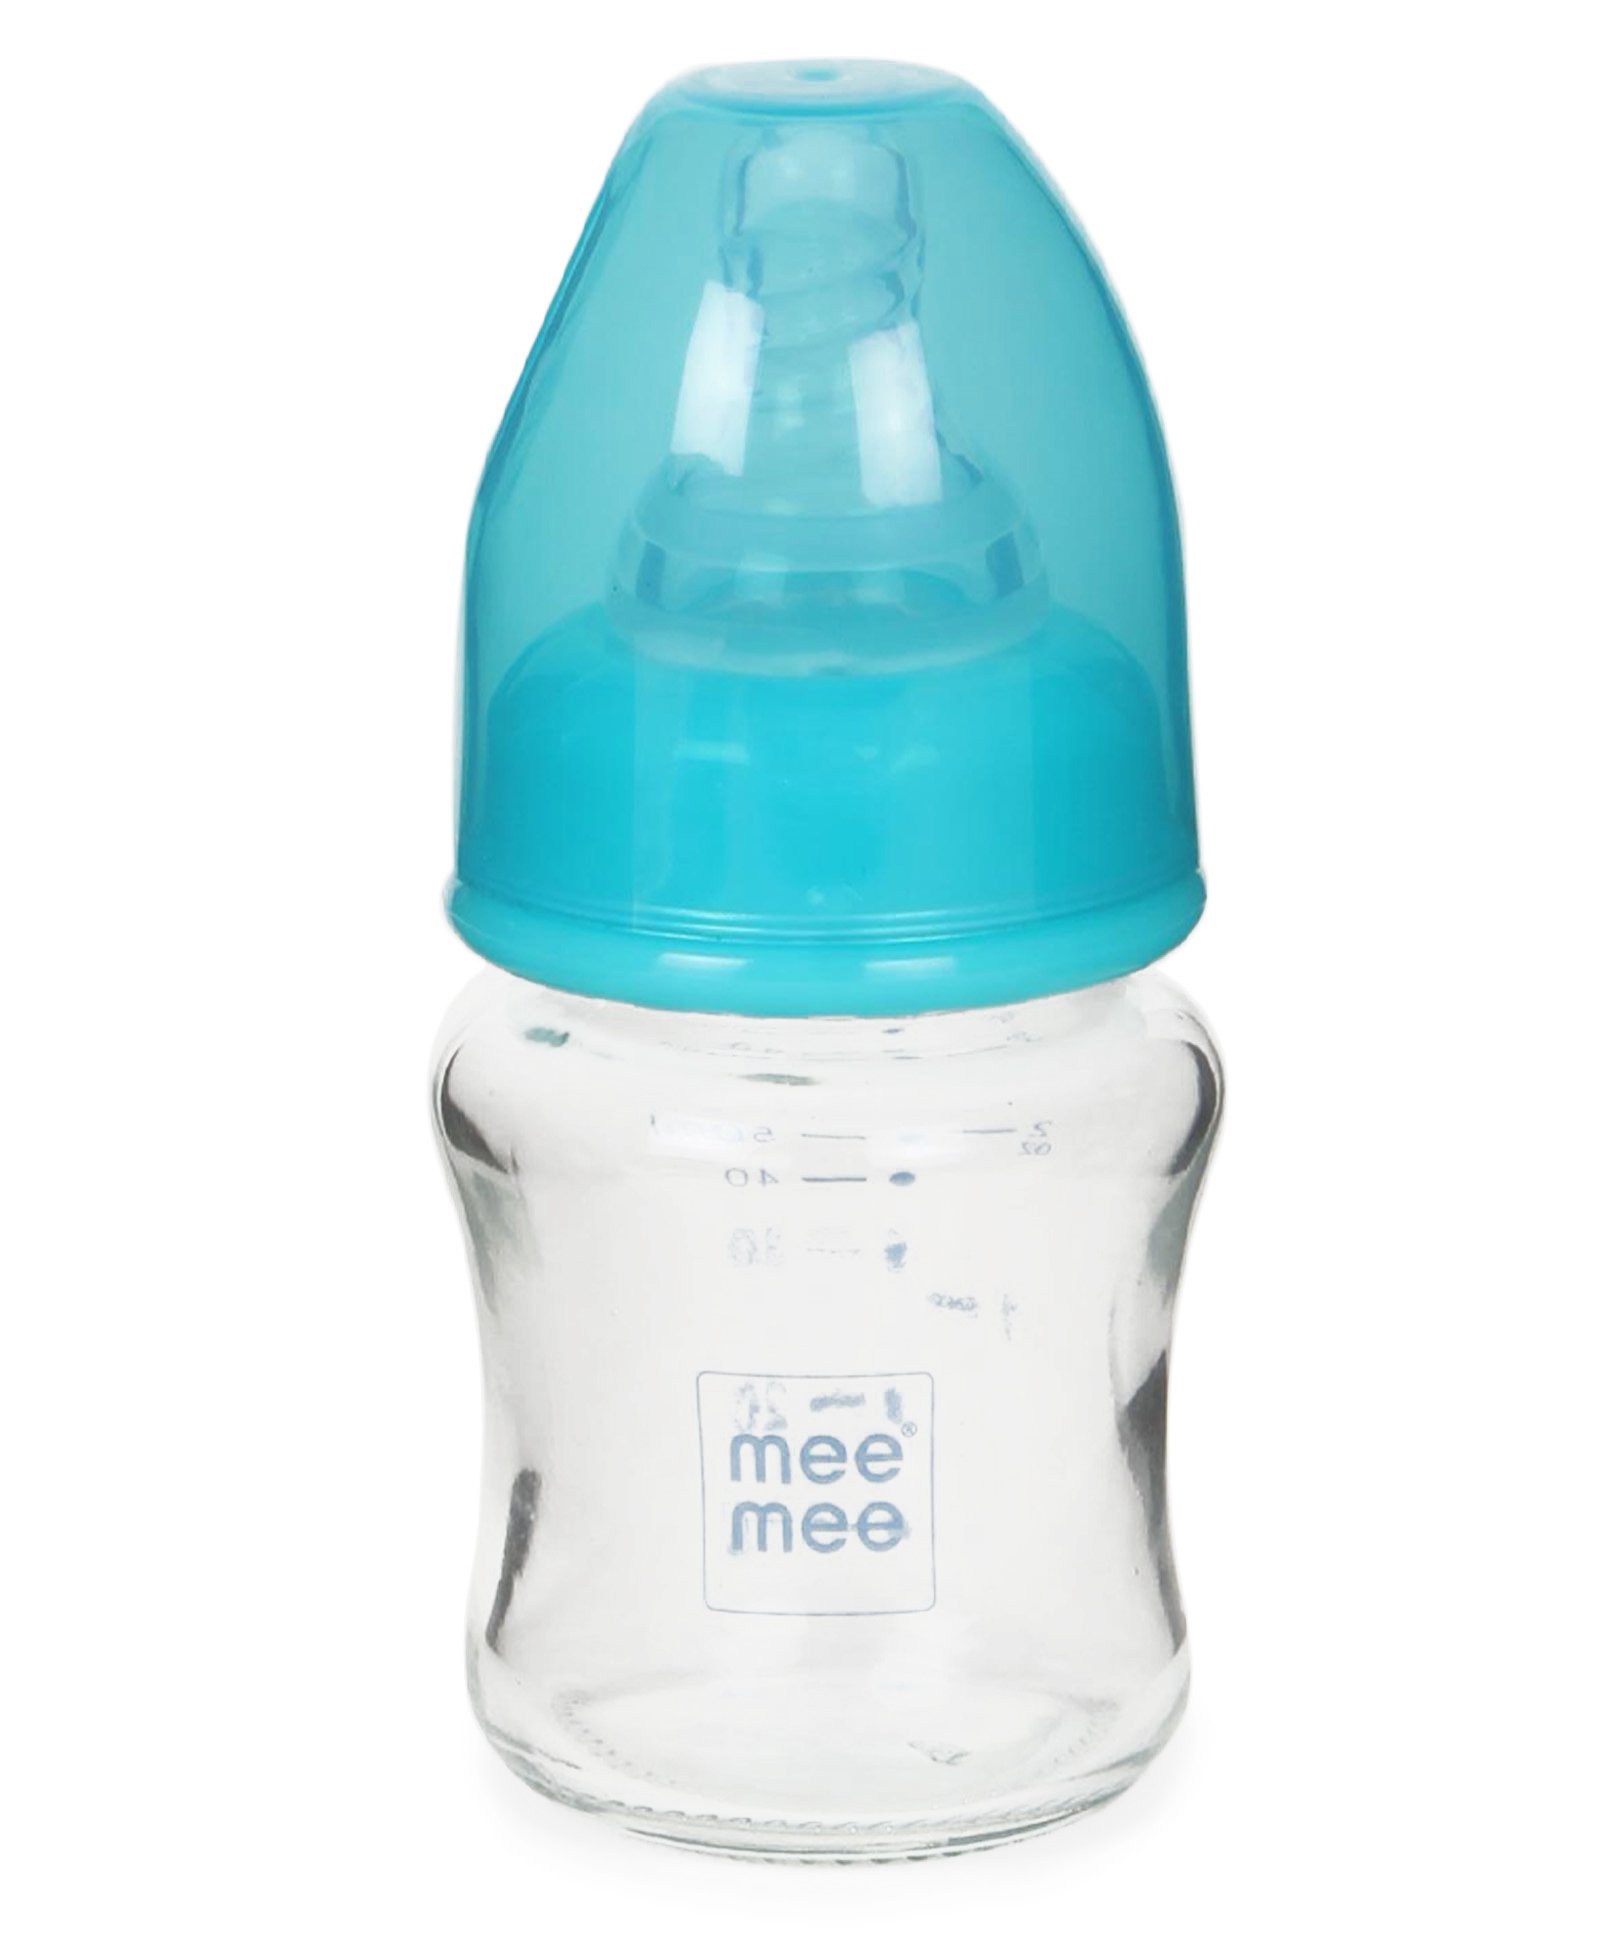 meemee feeding bottle